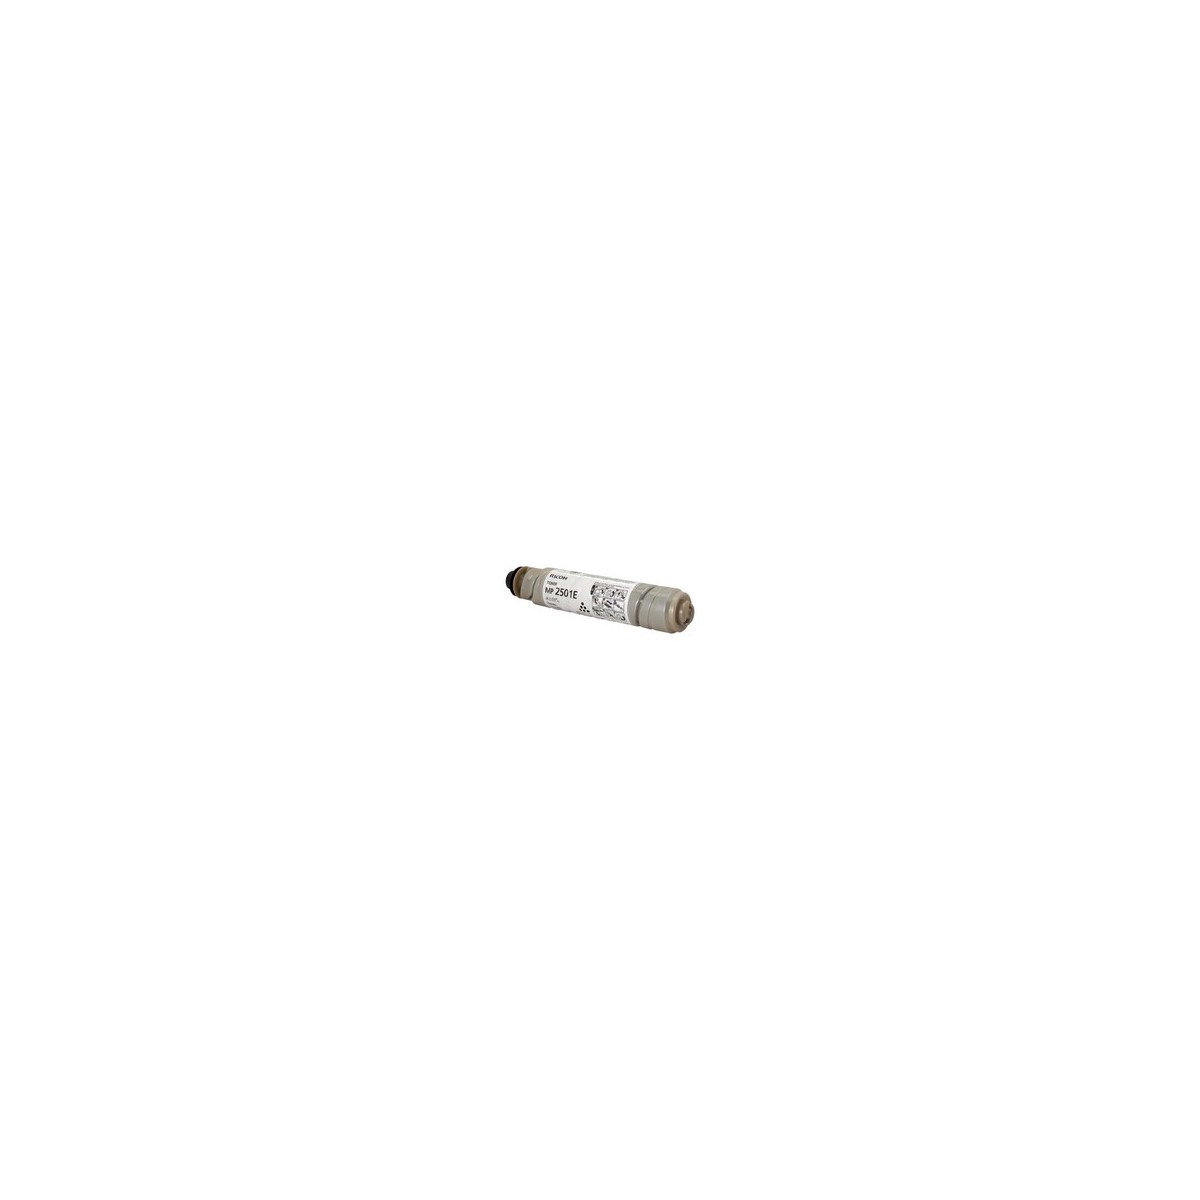 Ricoh Toner Cartridge 1 Pc s Compatible Black - Original - Toner Cartridge